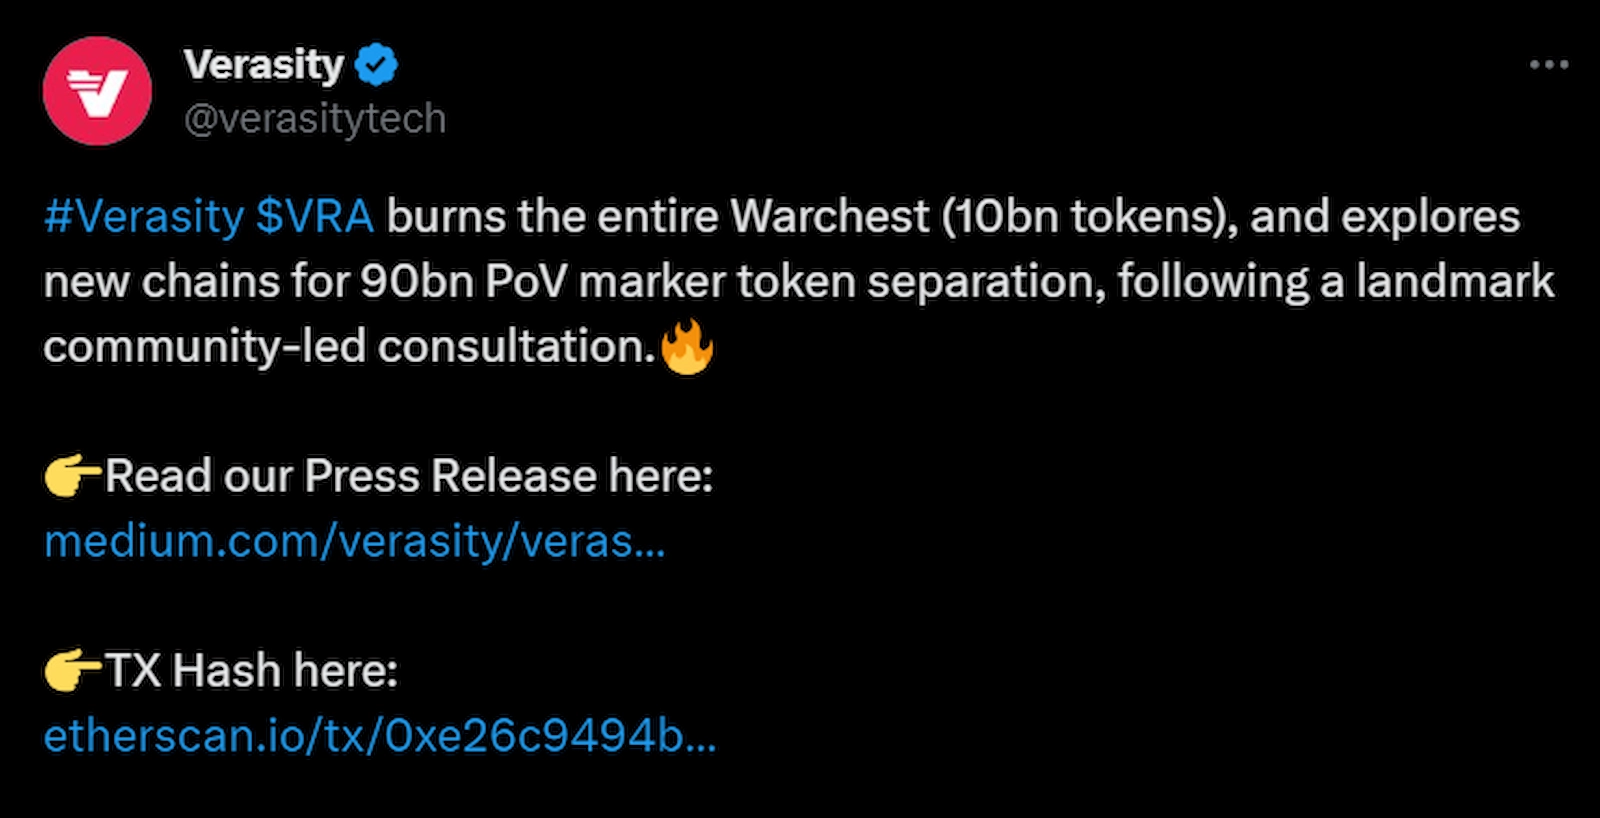 Verasity announced a token burn event.